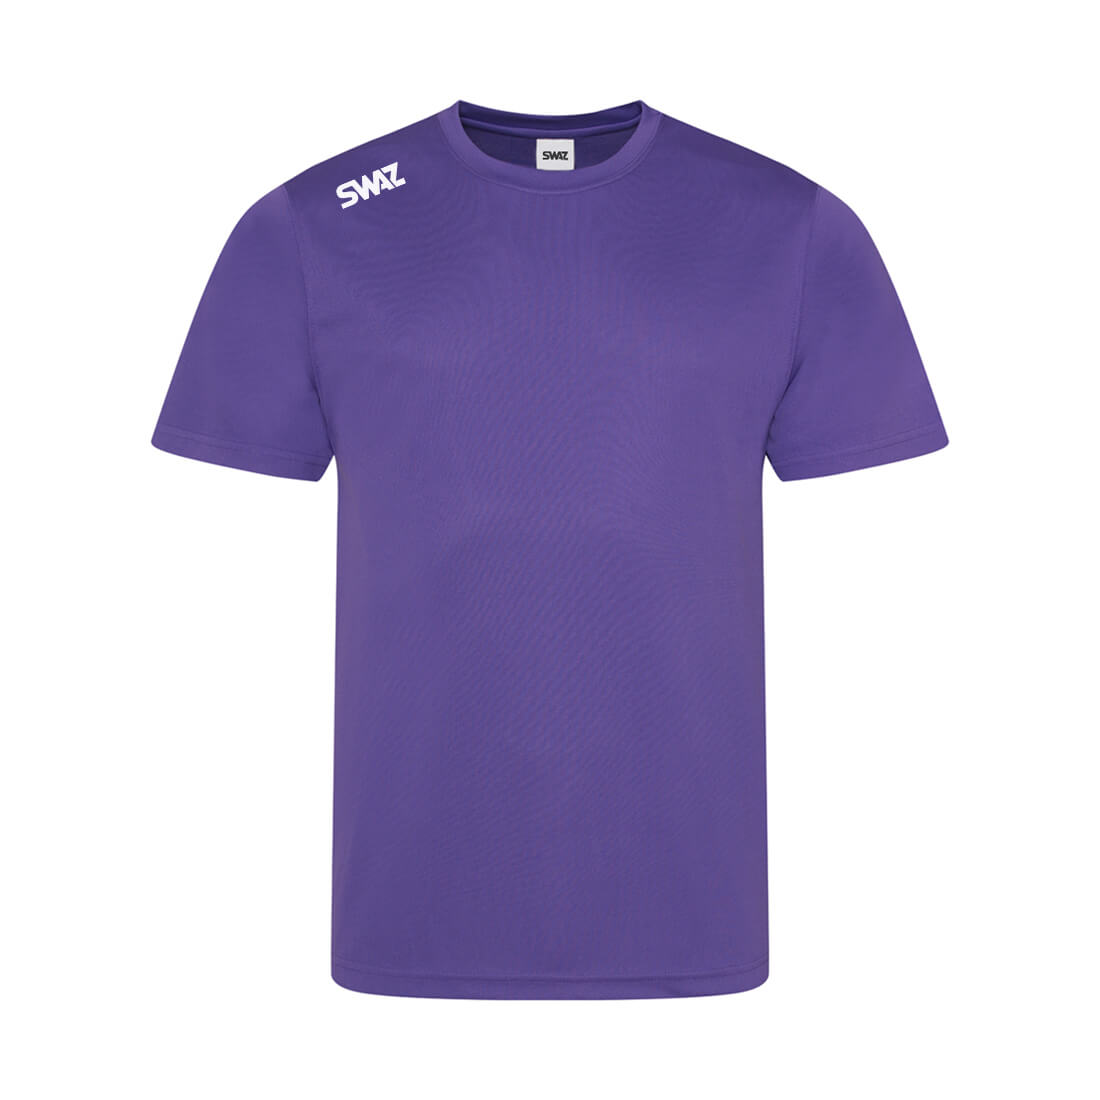 League Football Training Shirt | Football Training Kit and Teamwear – SWAZ